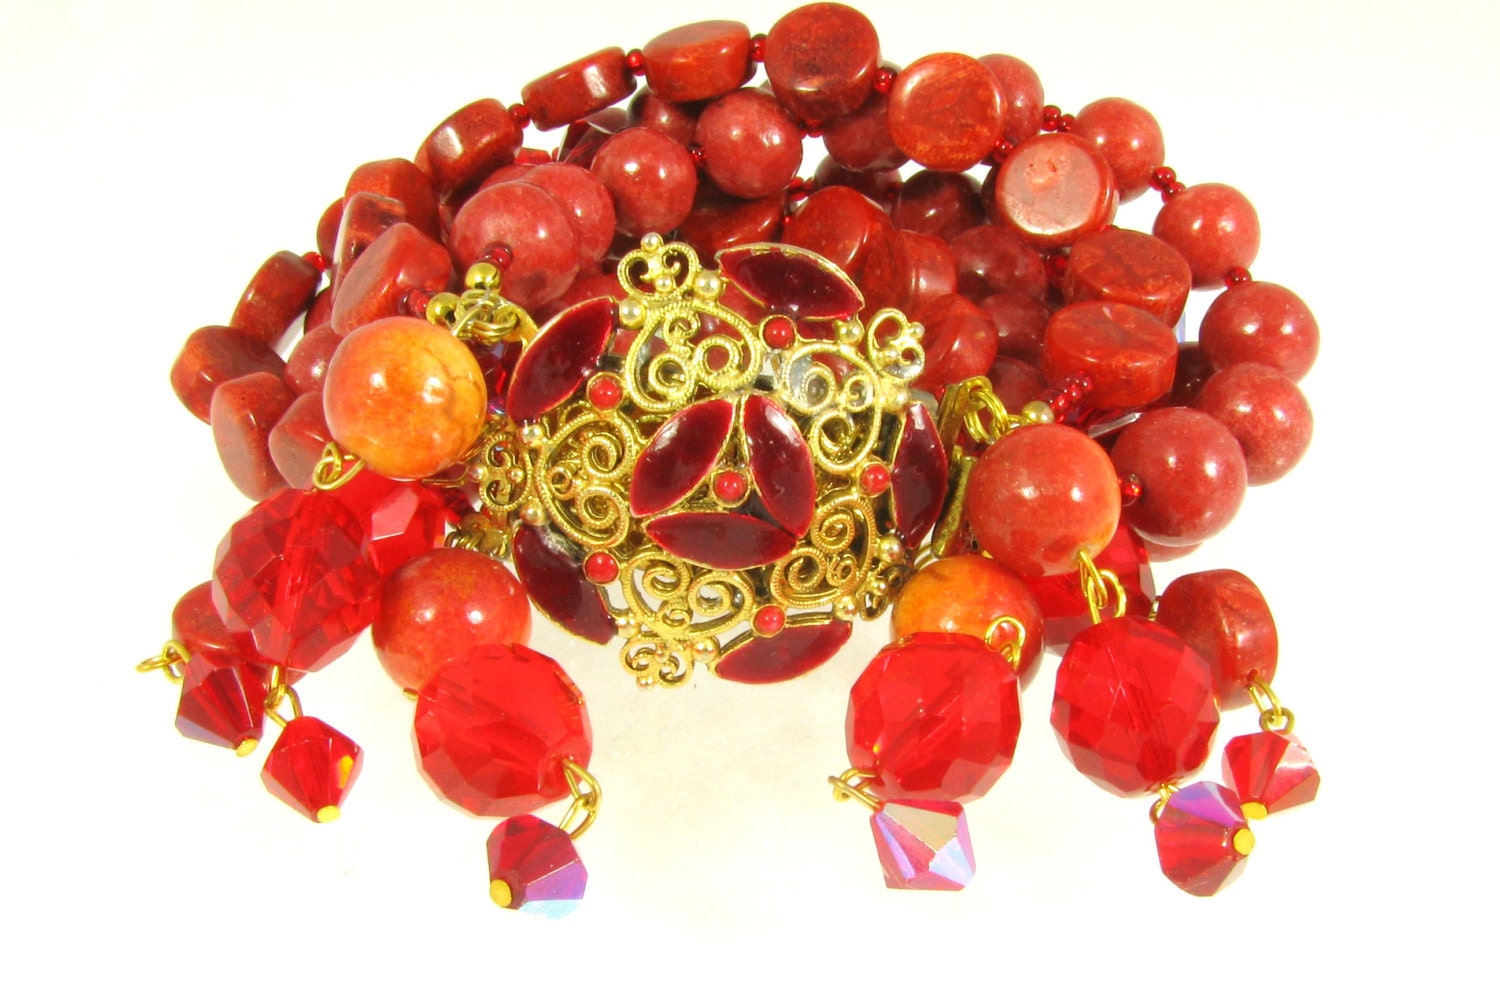 Coral Bracelet- Fashion Jewlery-Red bracelets-Statement Cuff-Coral Jewellery-Vintage Inspired-Unique Bracelets-Red,Orange,Gold Tones - katstreasureshop